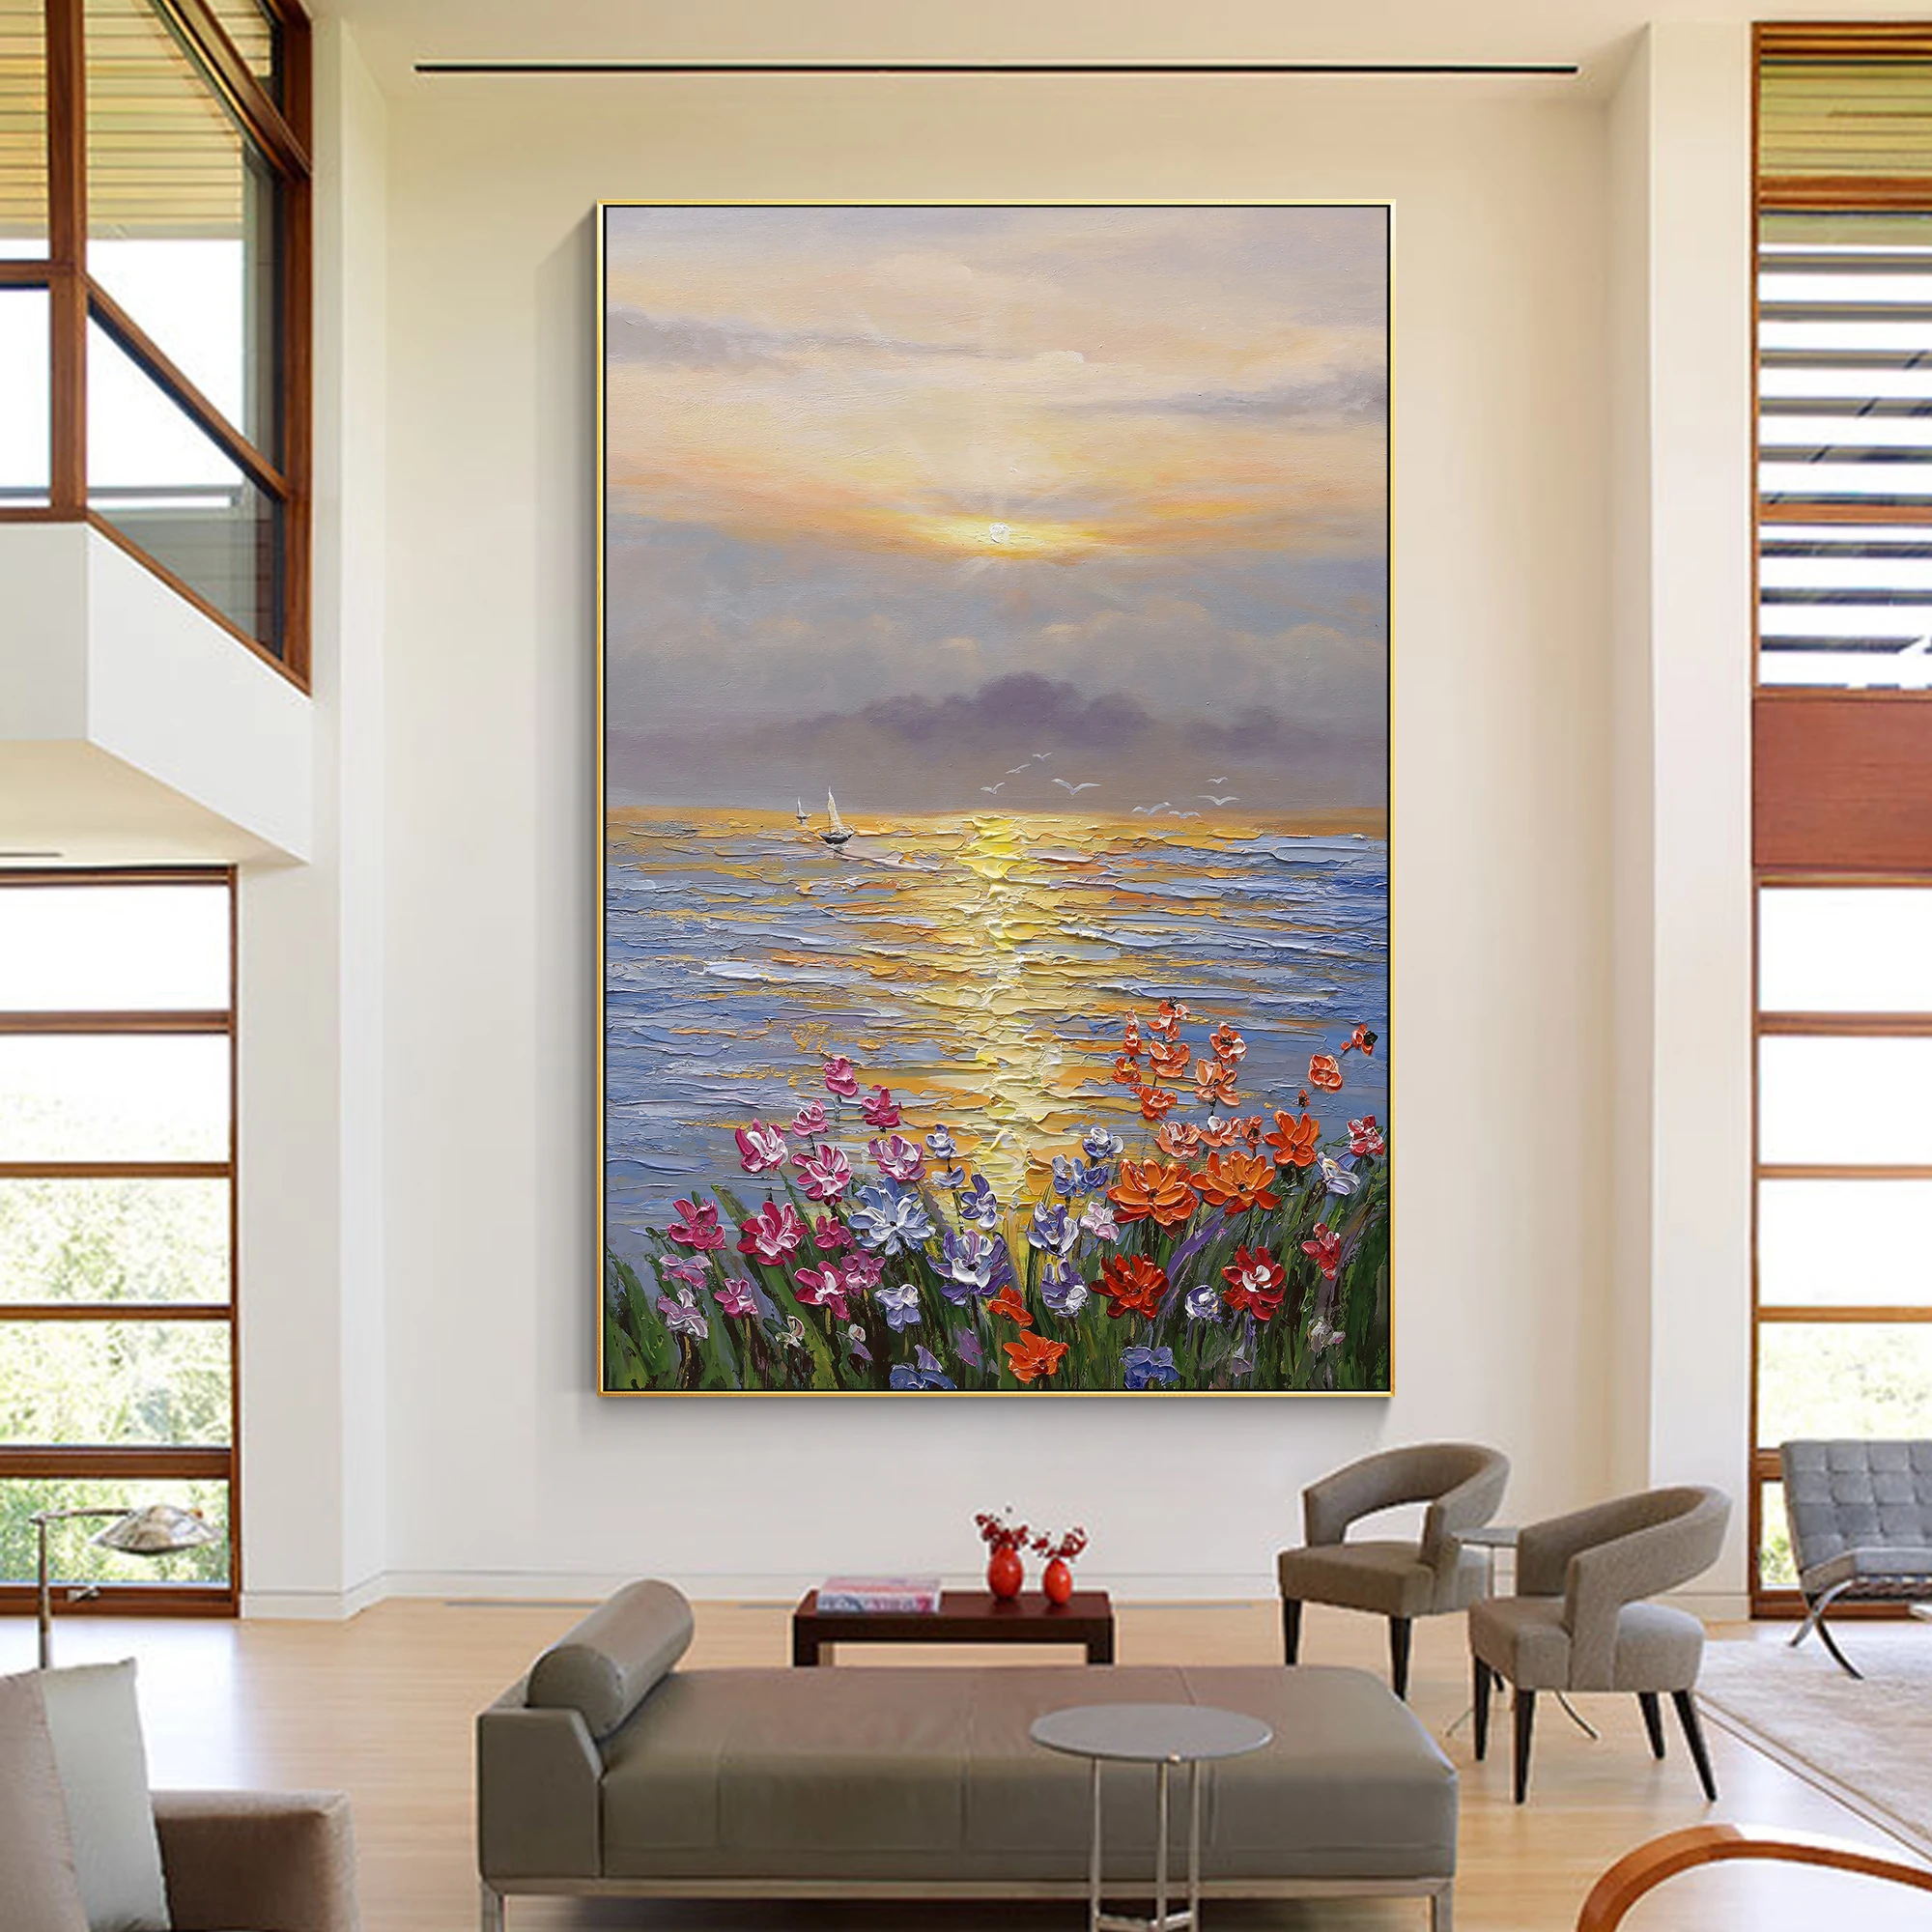 Handmade Flowers Seascape Sunrise Landscape Oil Painting On Canvas, Seascape Wall Art Home Décor